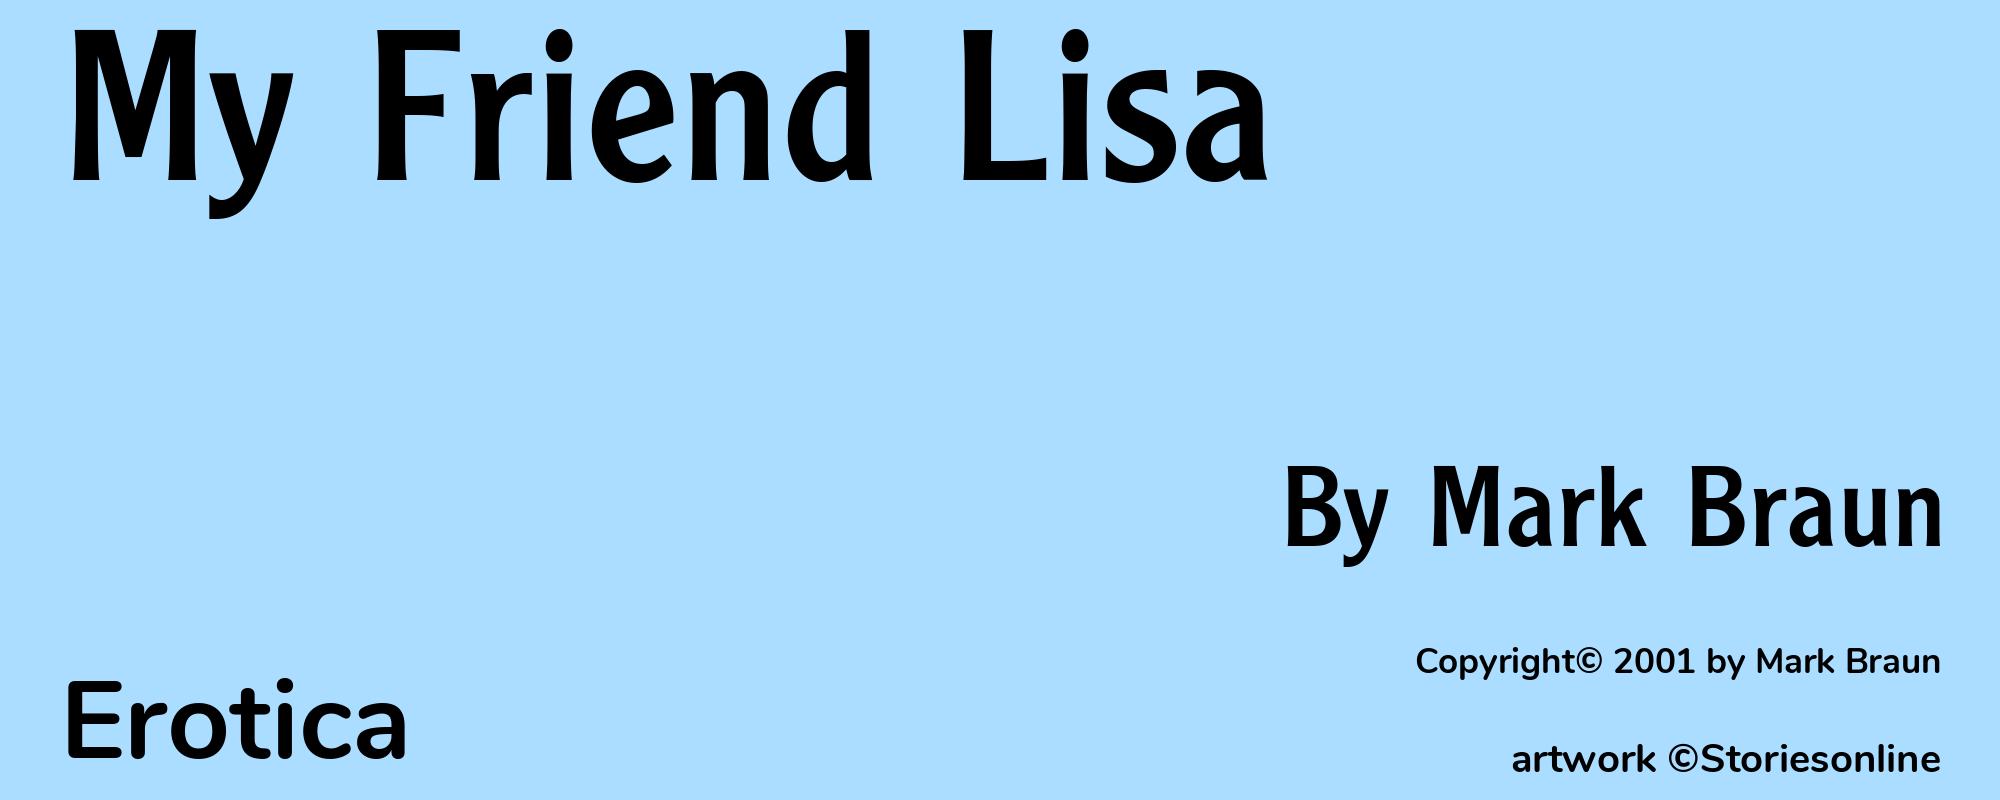 My Friend Lisa - Cover